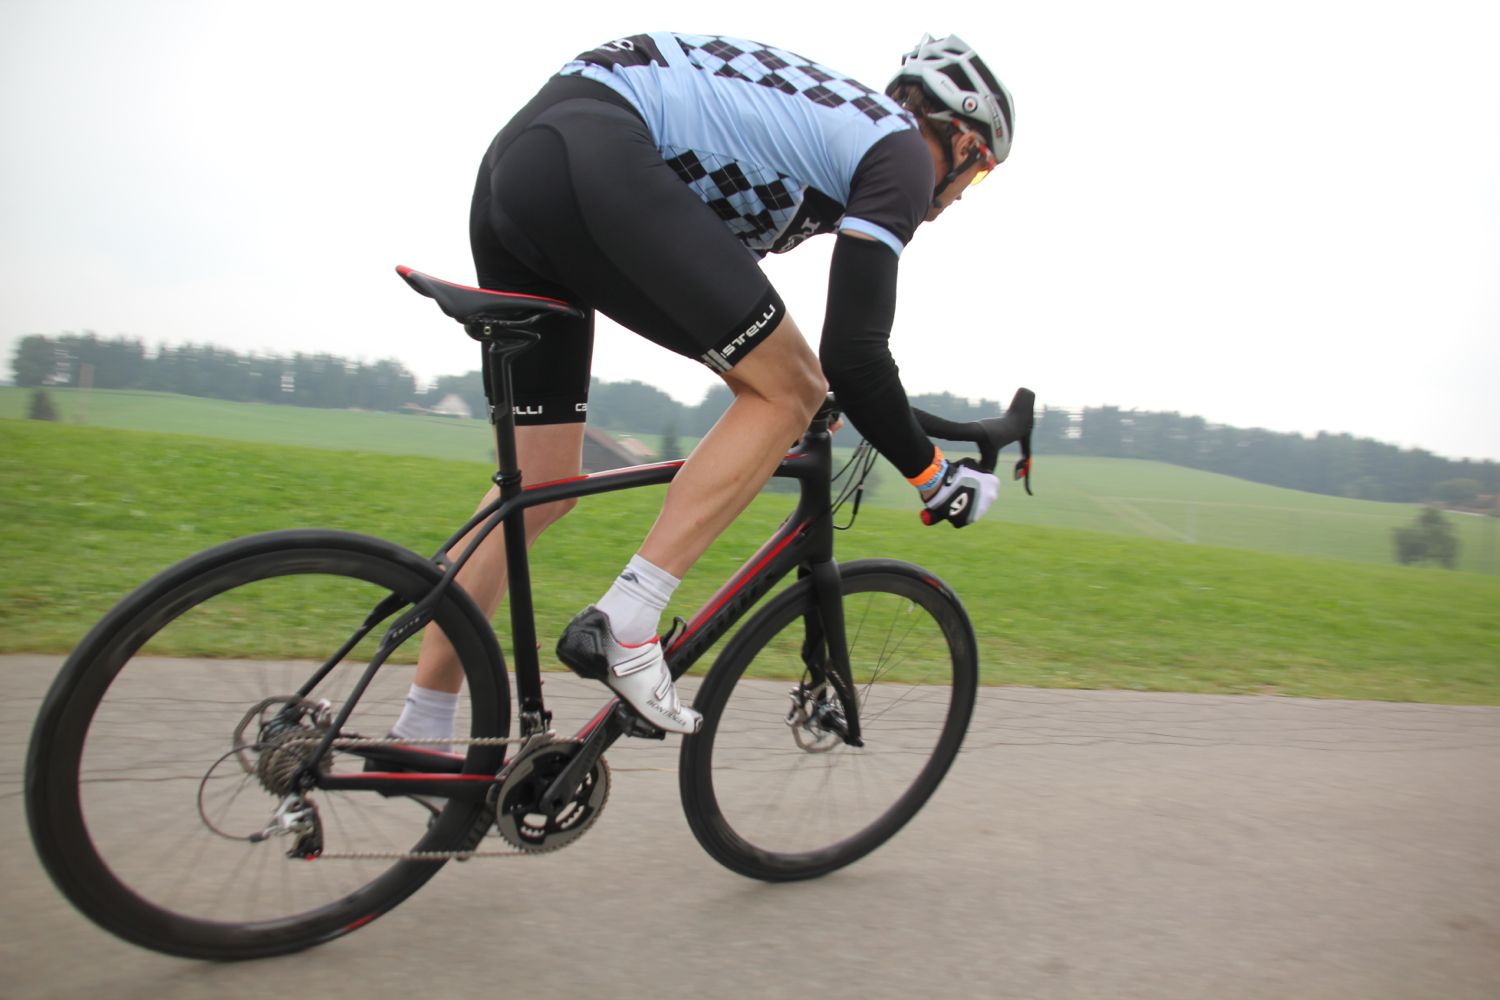 specialized roubaix sl4 carbon road bike